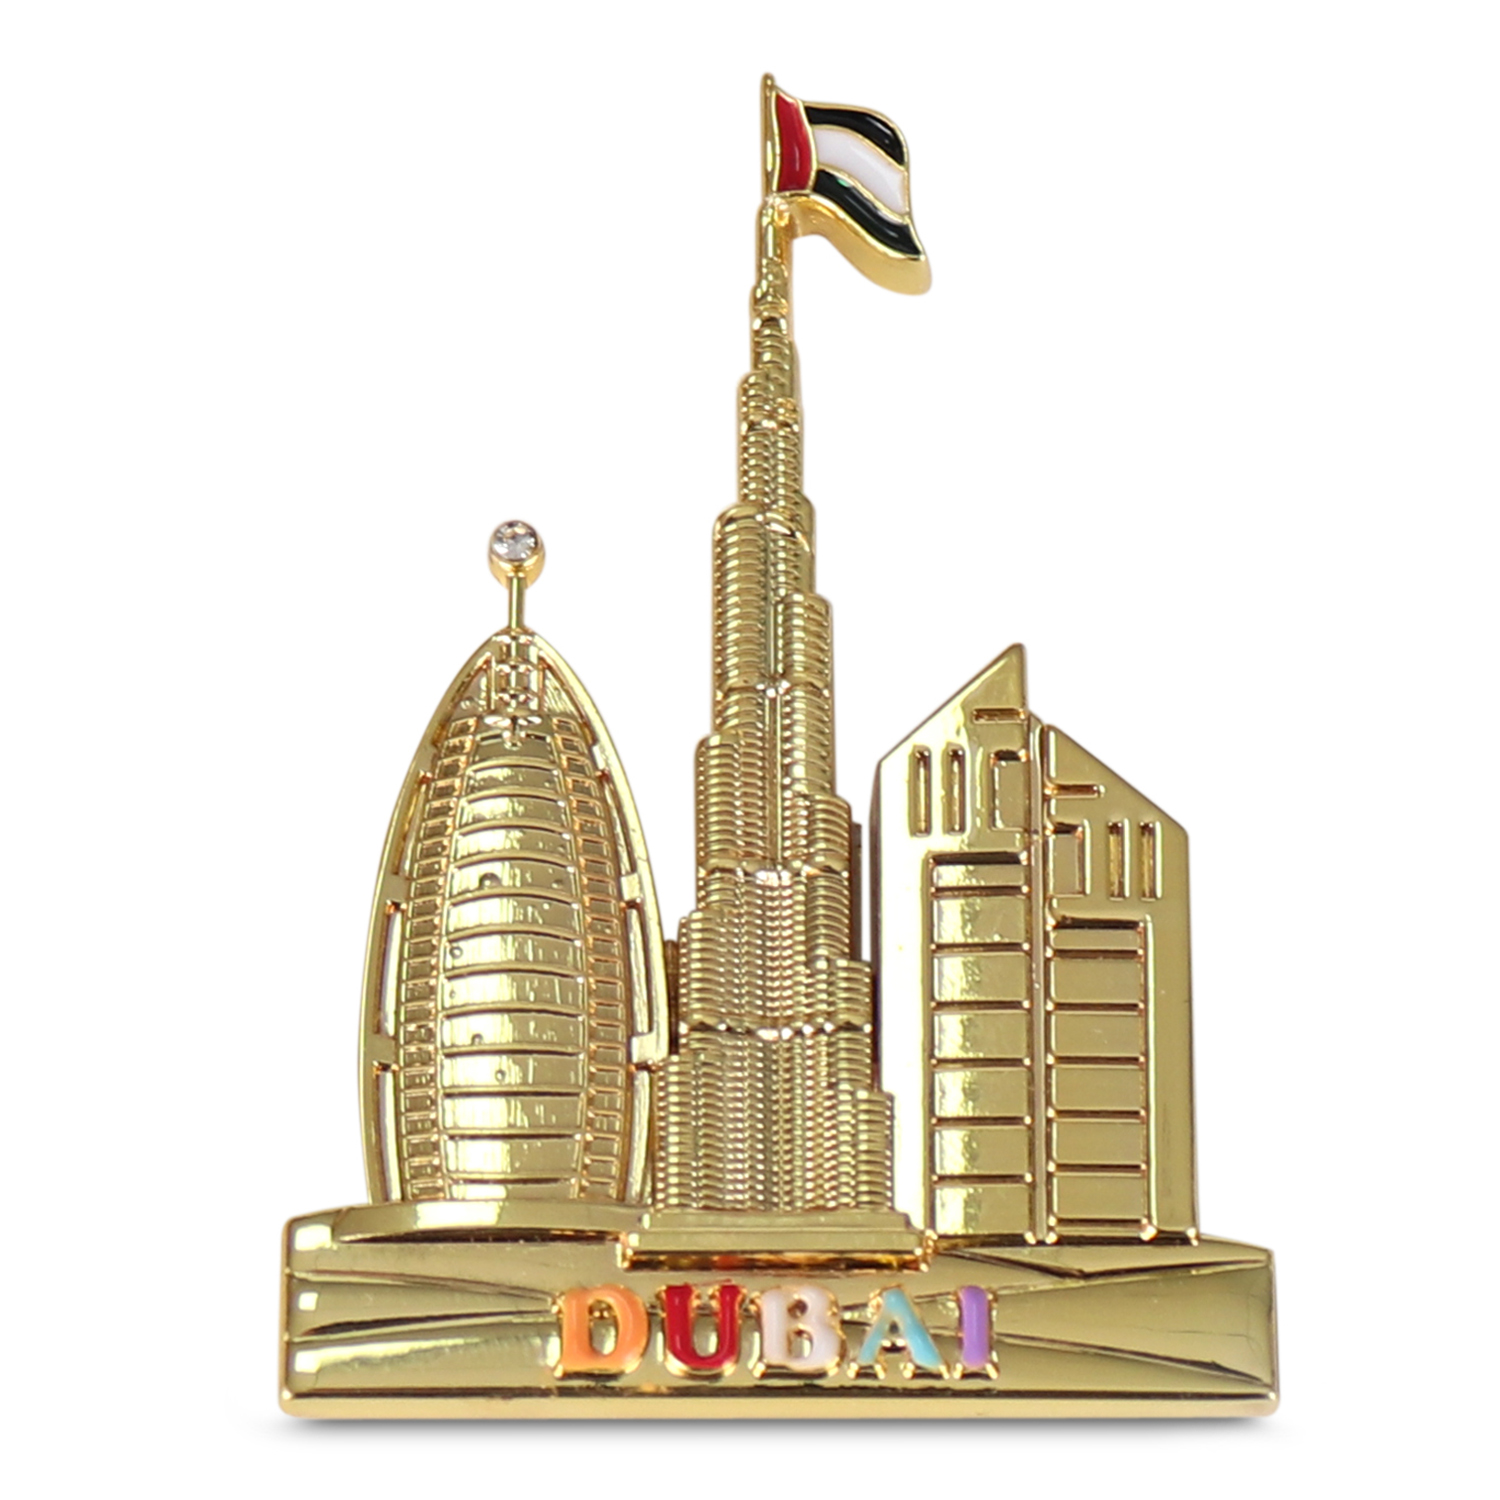 DUBAI  fridge magnet with Burj Al Arab Hotel & Burj Khalifa Tower